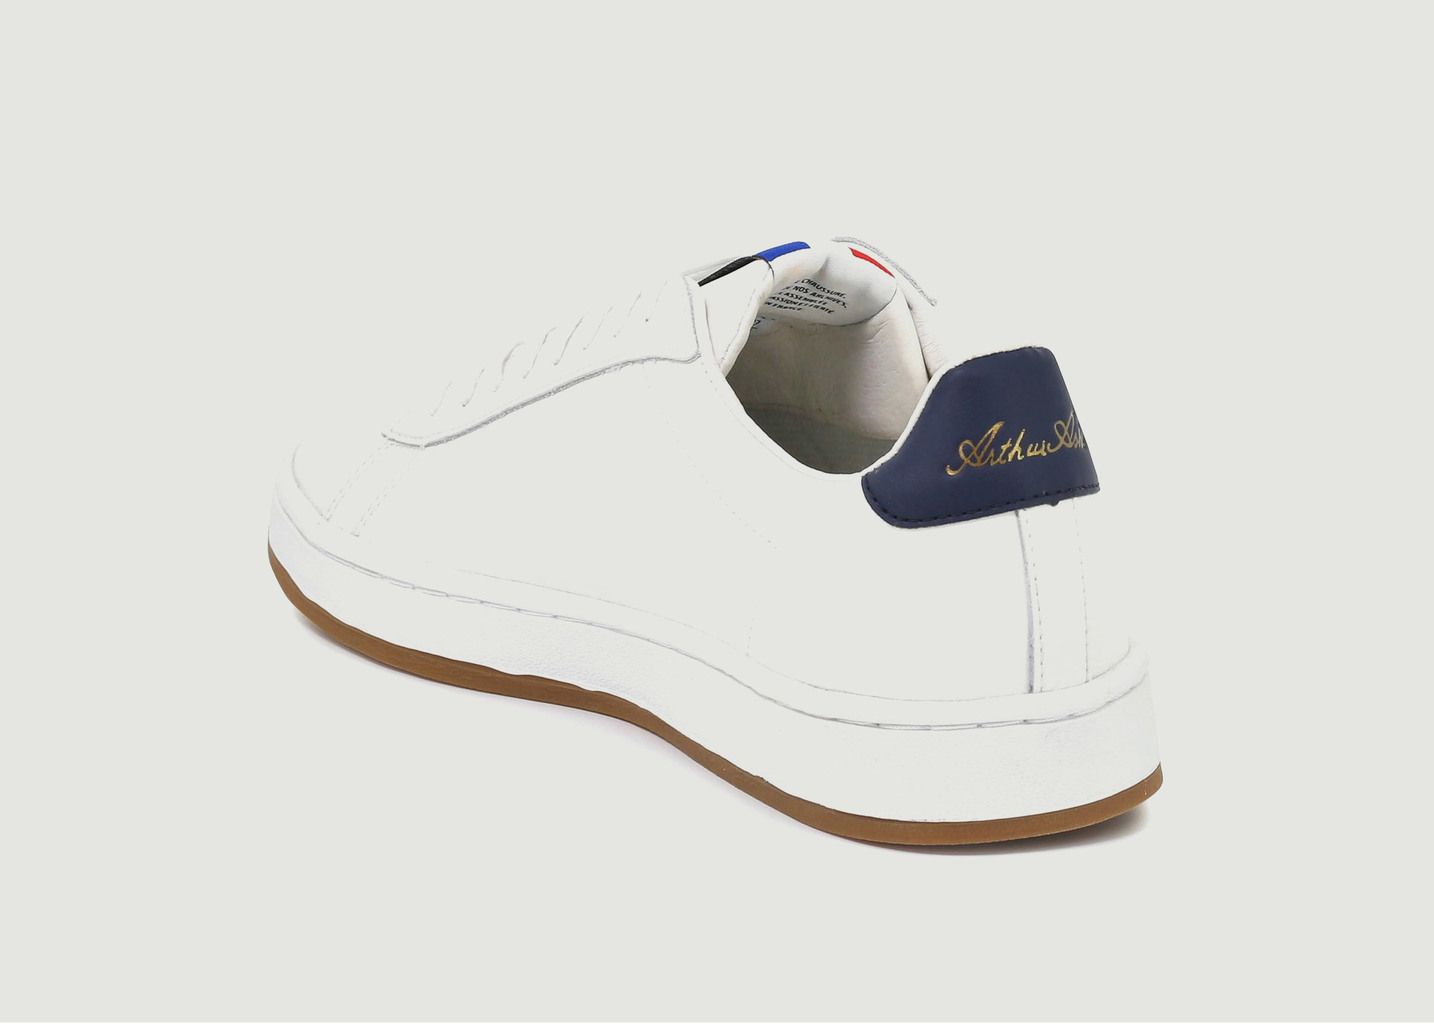 Classic Soft Arthur Ashe leather sneakers - Le Coq Sportif